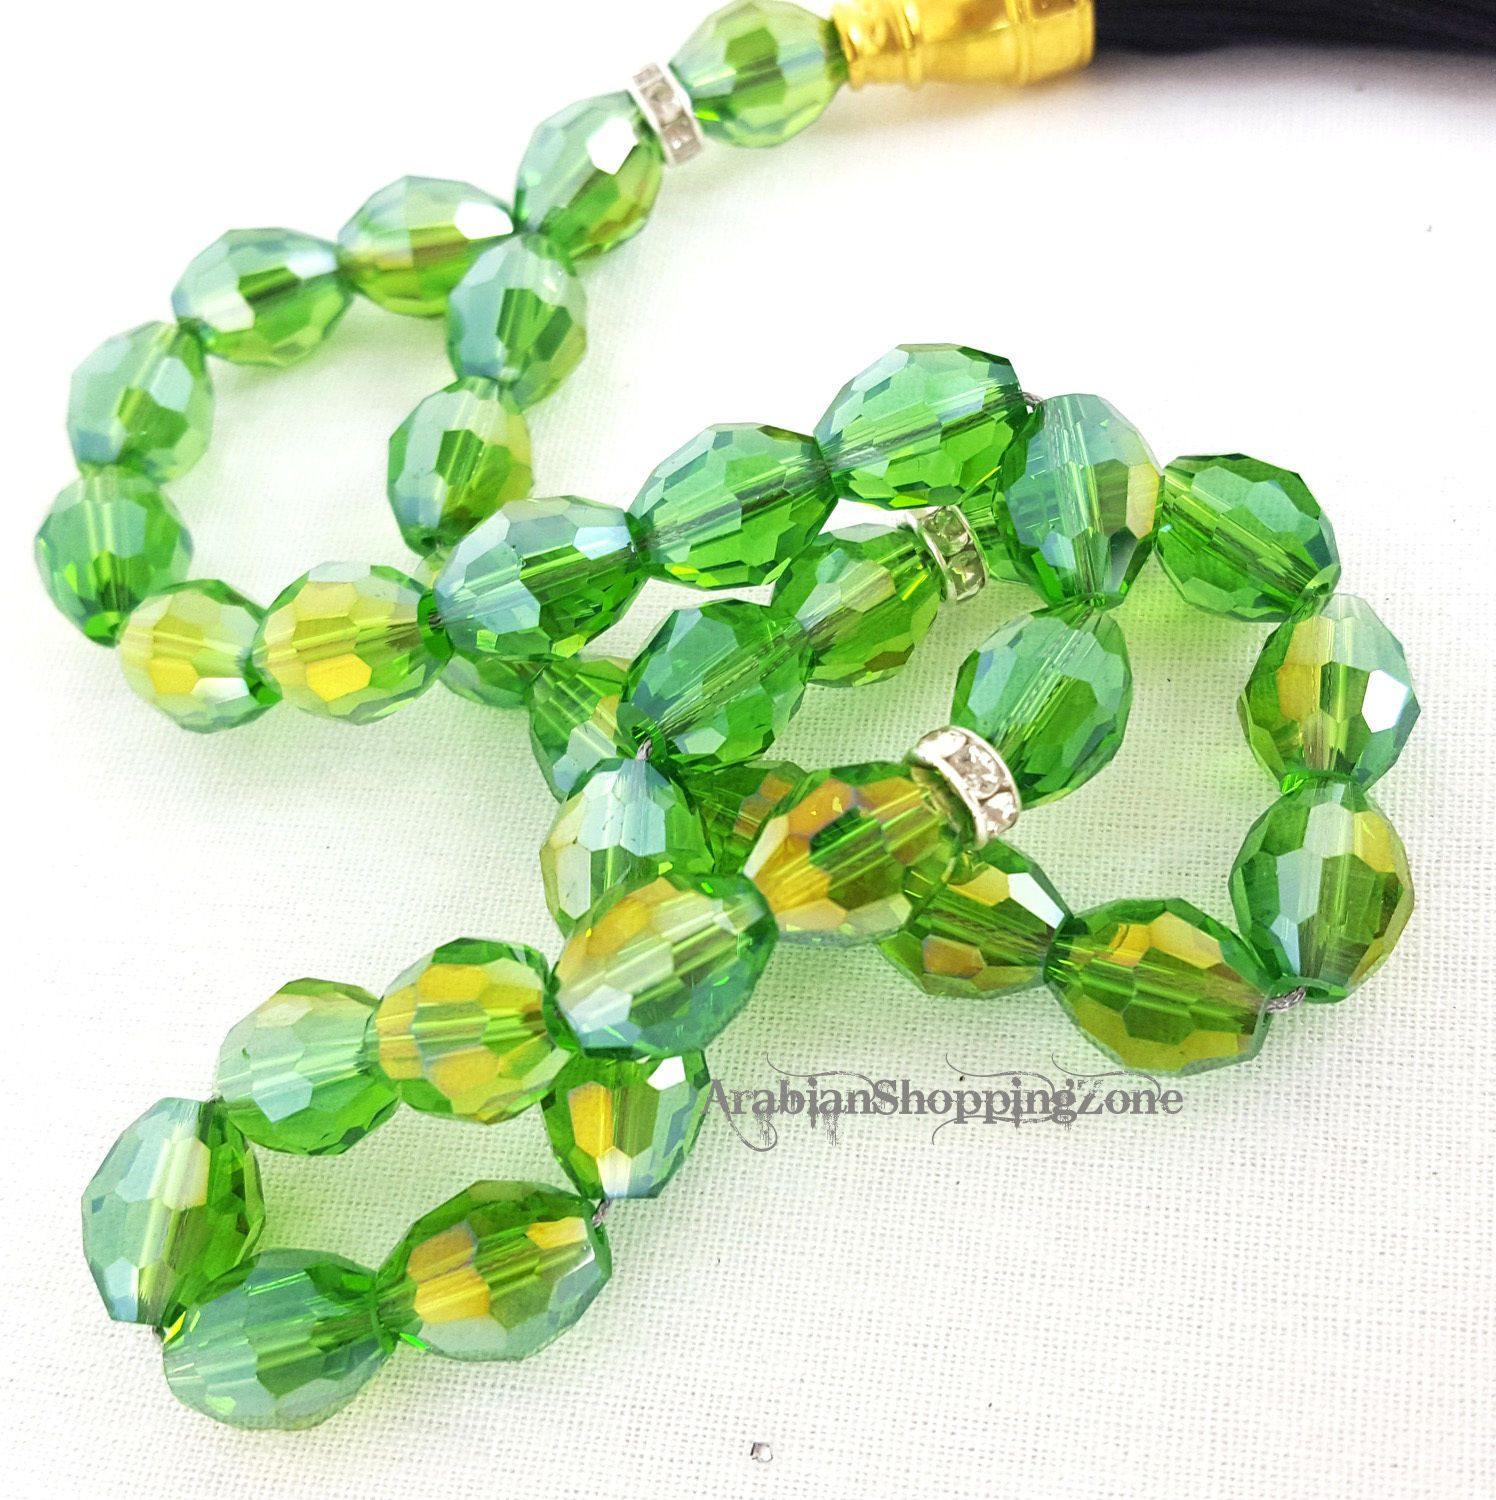 Islamic Salah 12mm Emerald Crystal Prayer Beads 33 Mesbaha - Arabian Shopping Zone